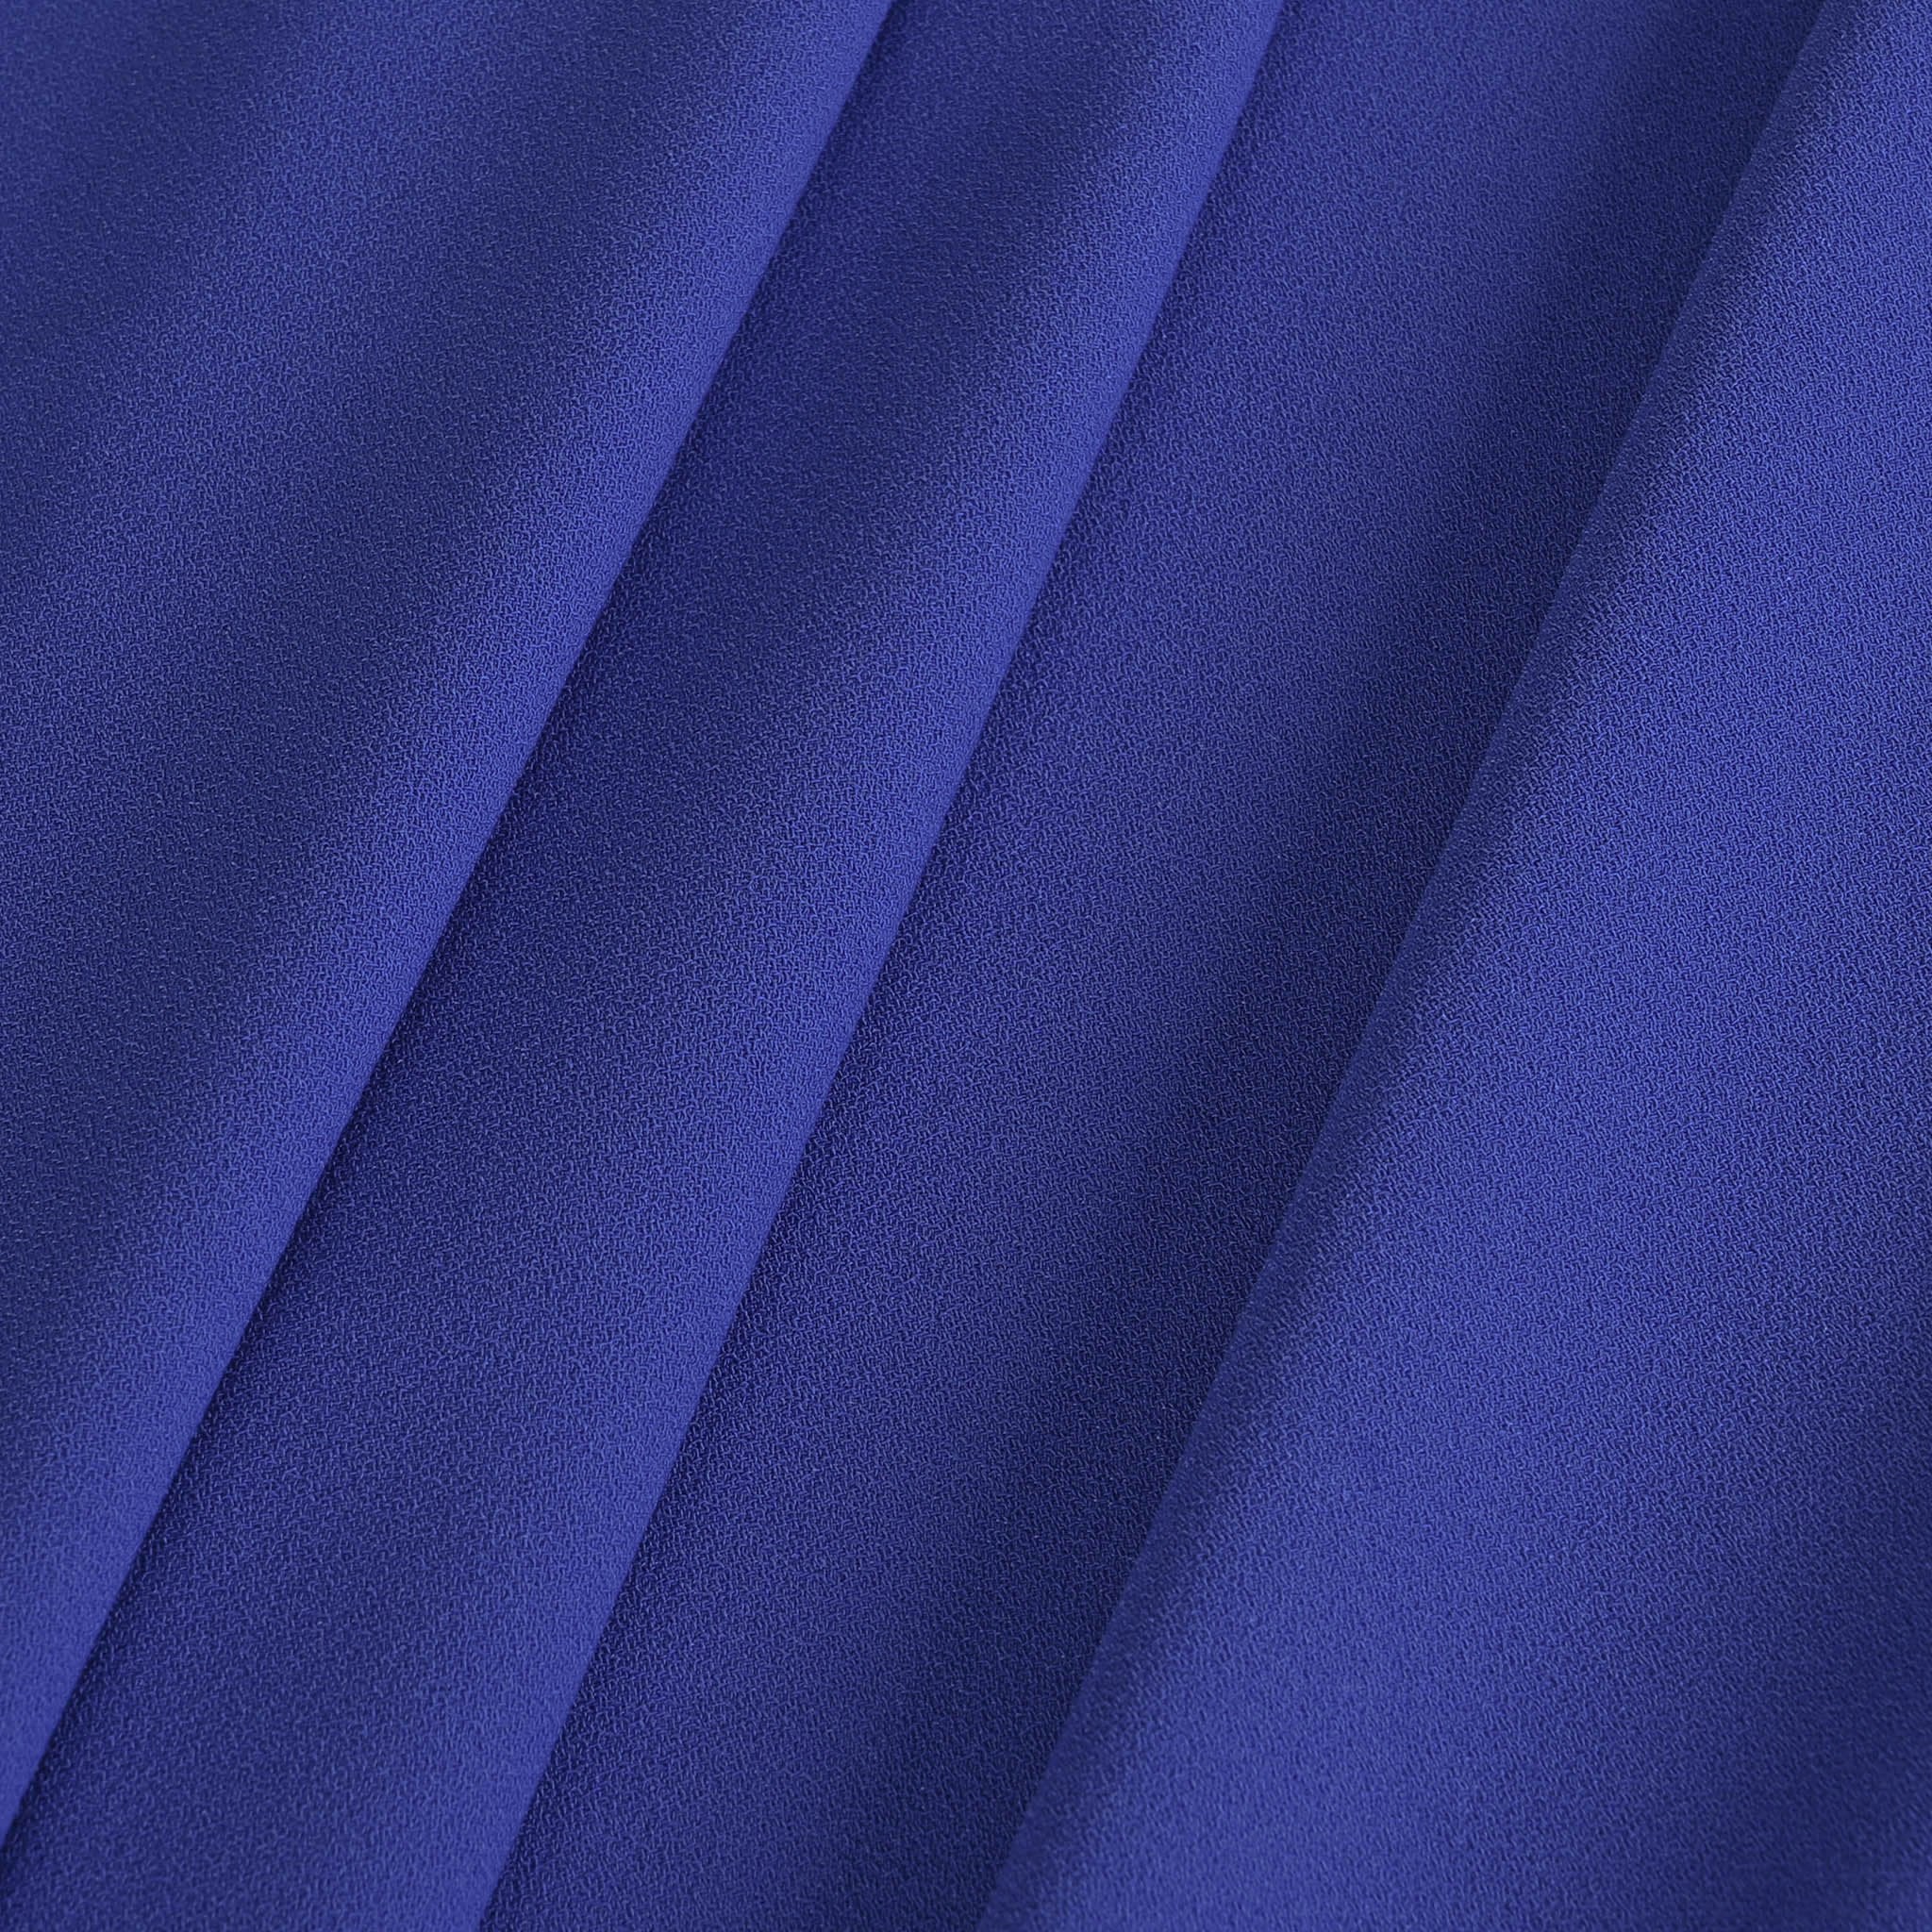 Blue Crepe Fabric 2562